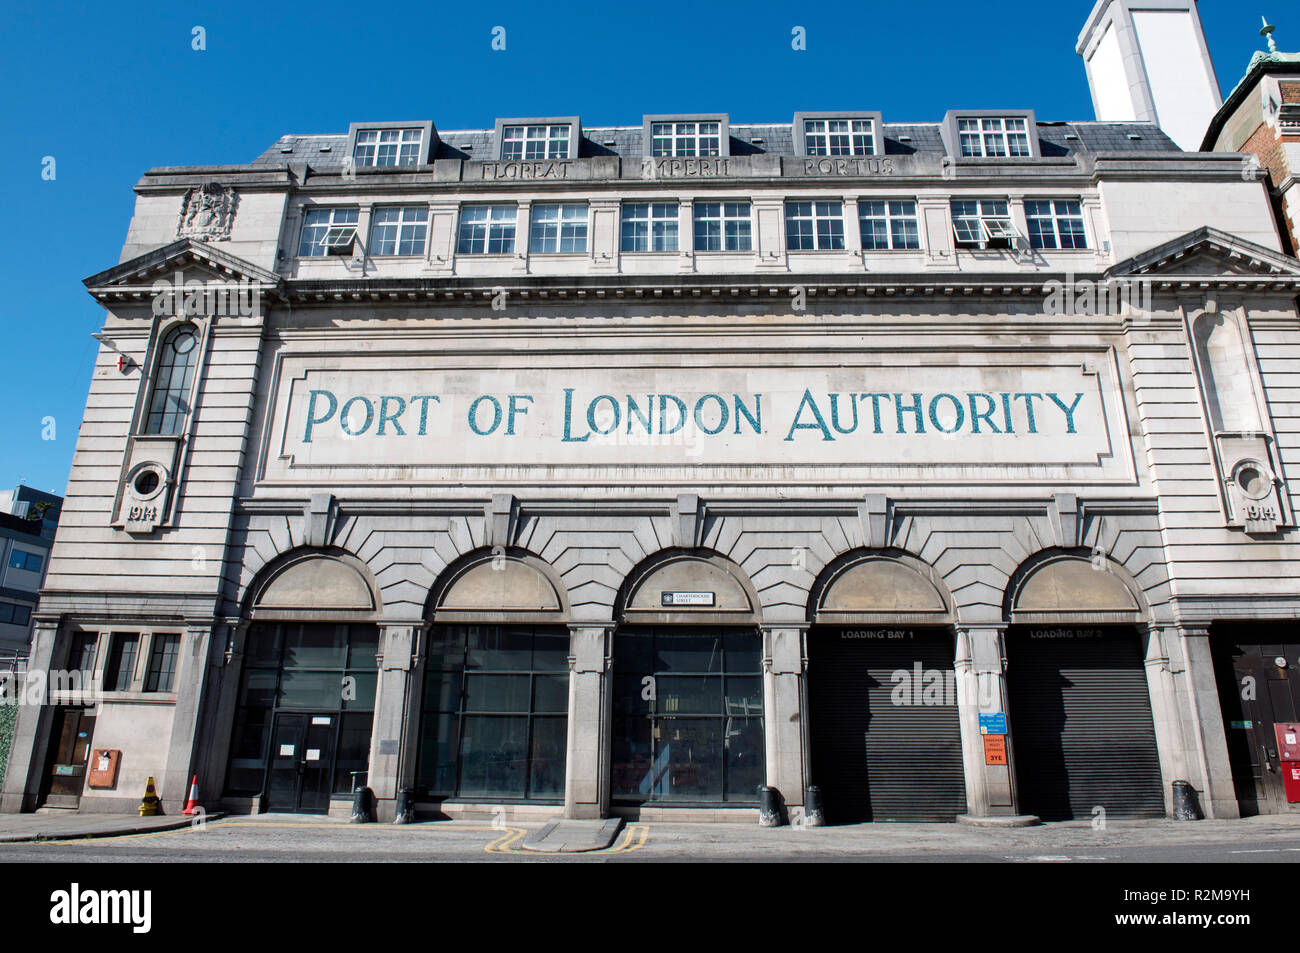 Port of London Authority building, formally their cold storage facility, Charterhouse Street, Smithfield, EC1 City of London England Britain UK Stock Photo